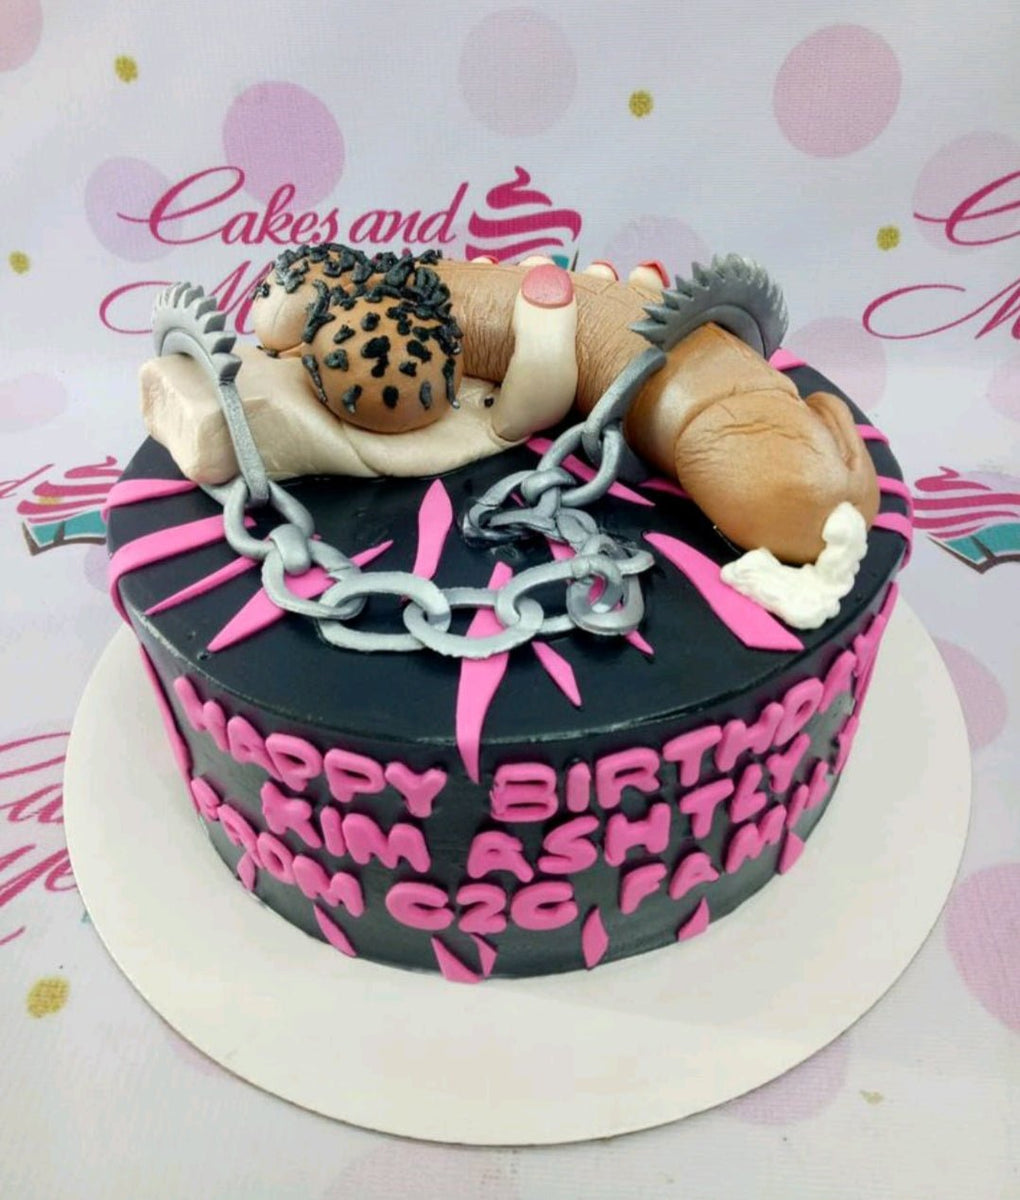 Boobs Birthday Cake, Boobs Cake, Adult Cake